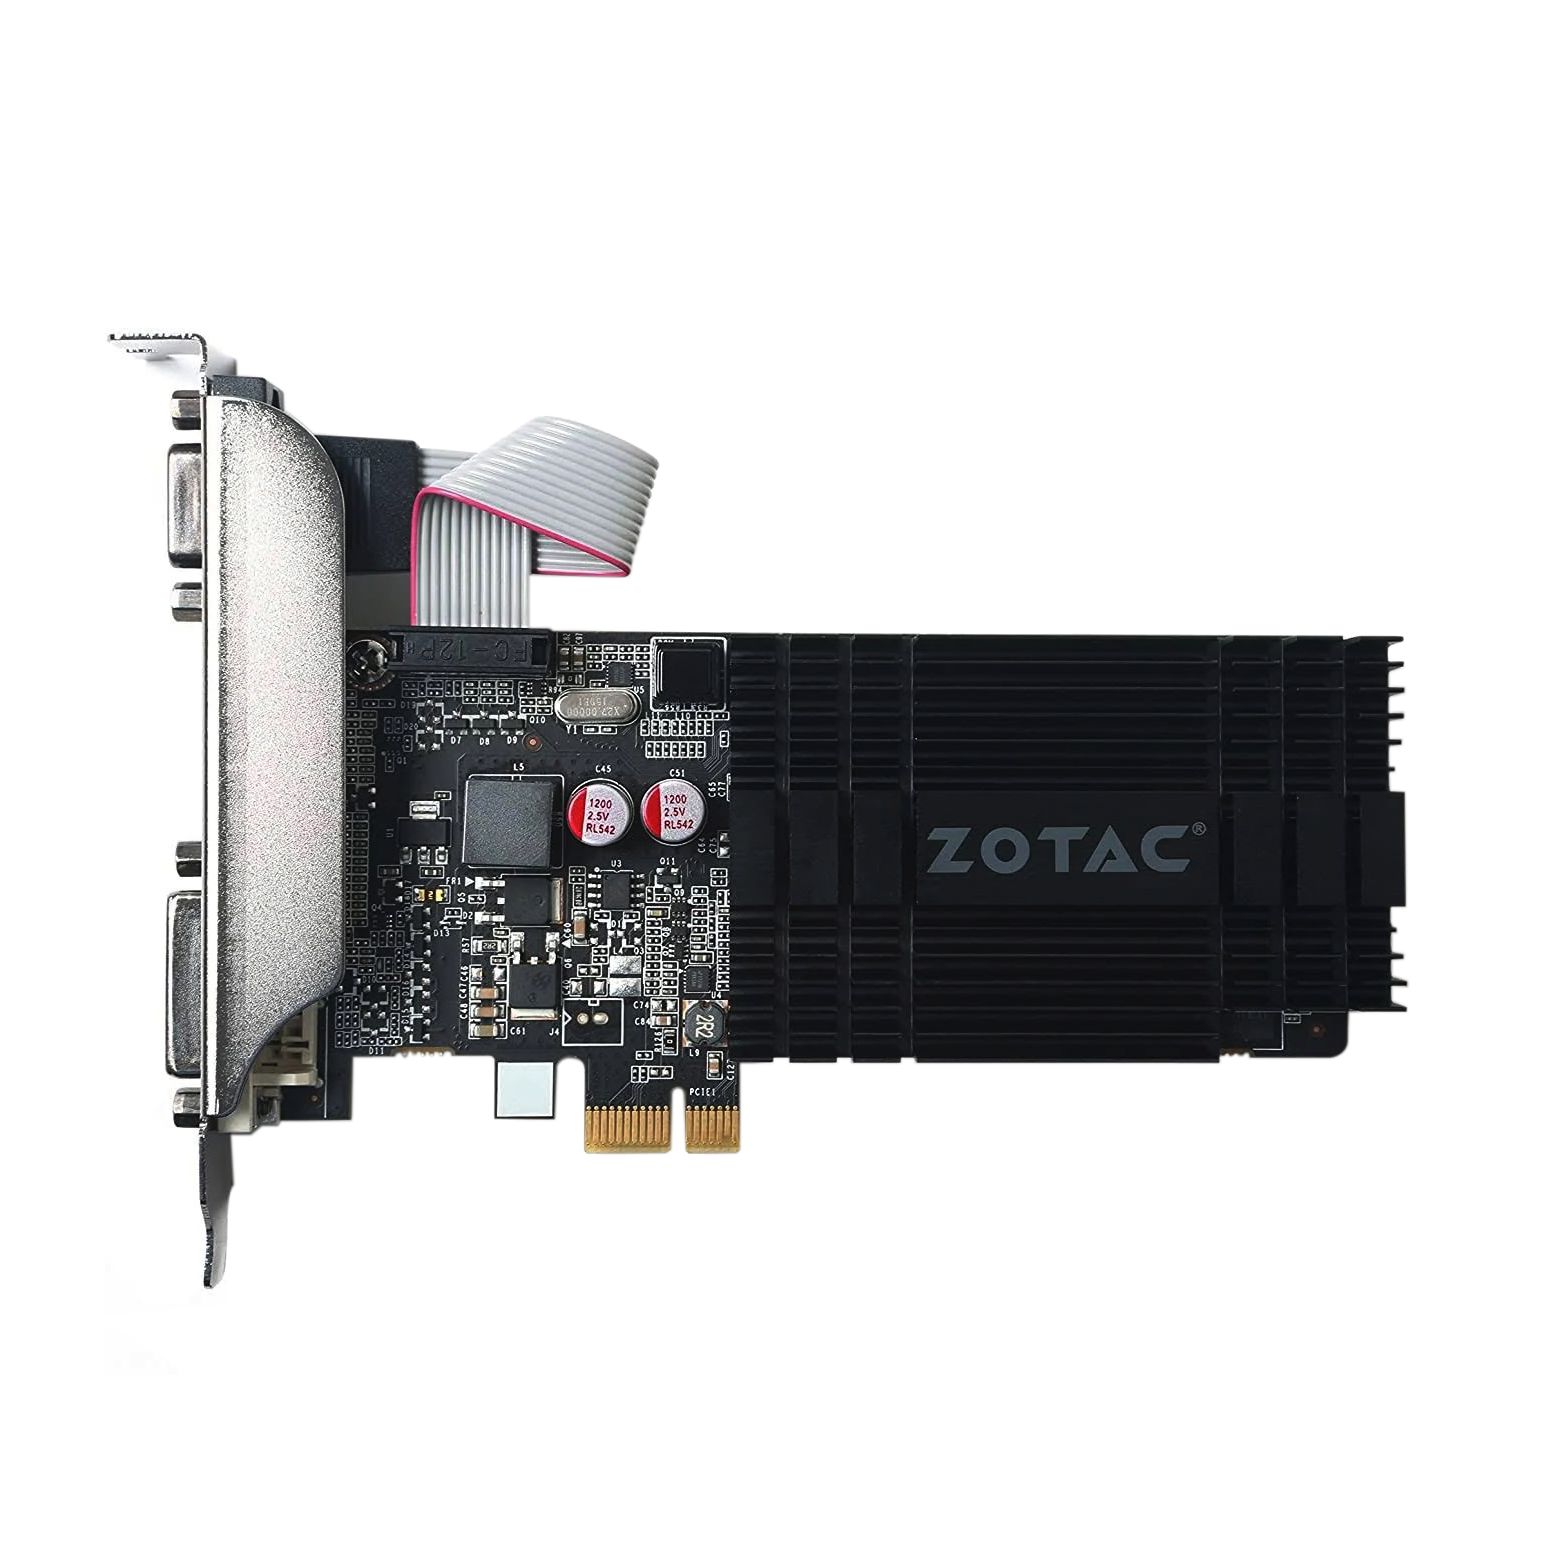 ZOTAC GeForce GT 710 2GB HDMI/DVI/VGA Graphics Card from PCLiquidations